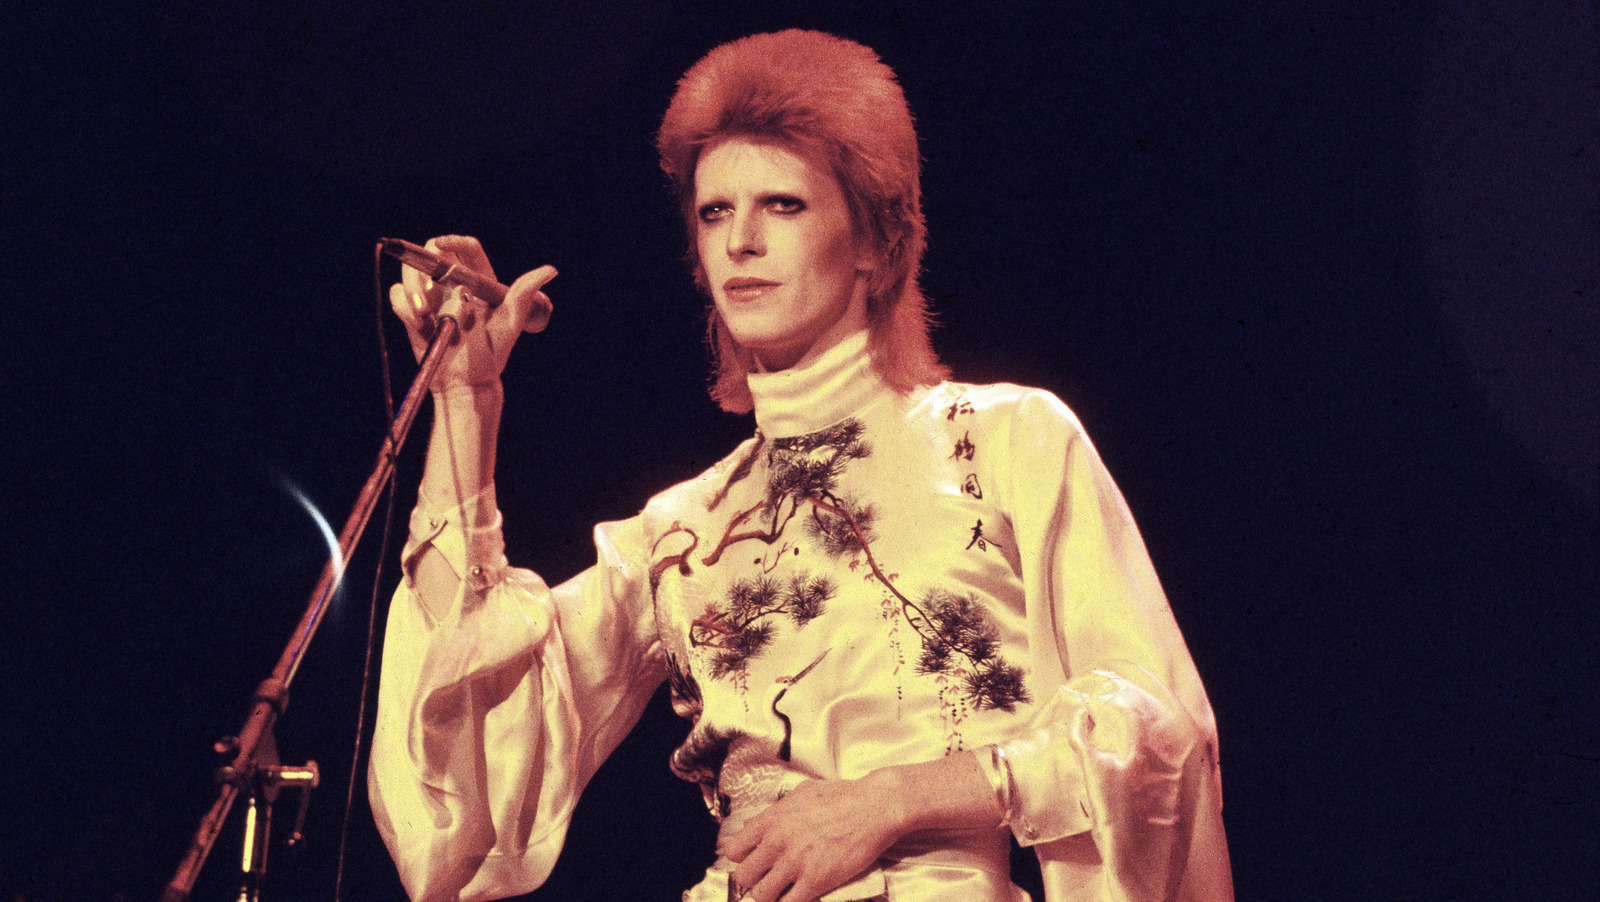 David Bowie Glam Rocker Costume Wig